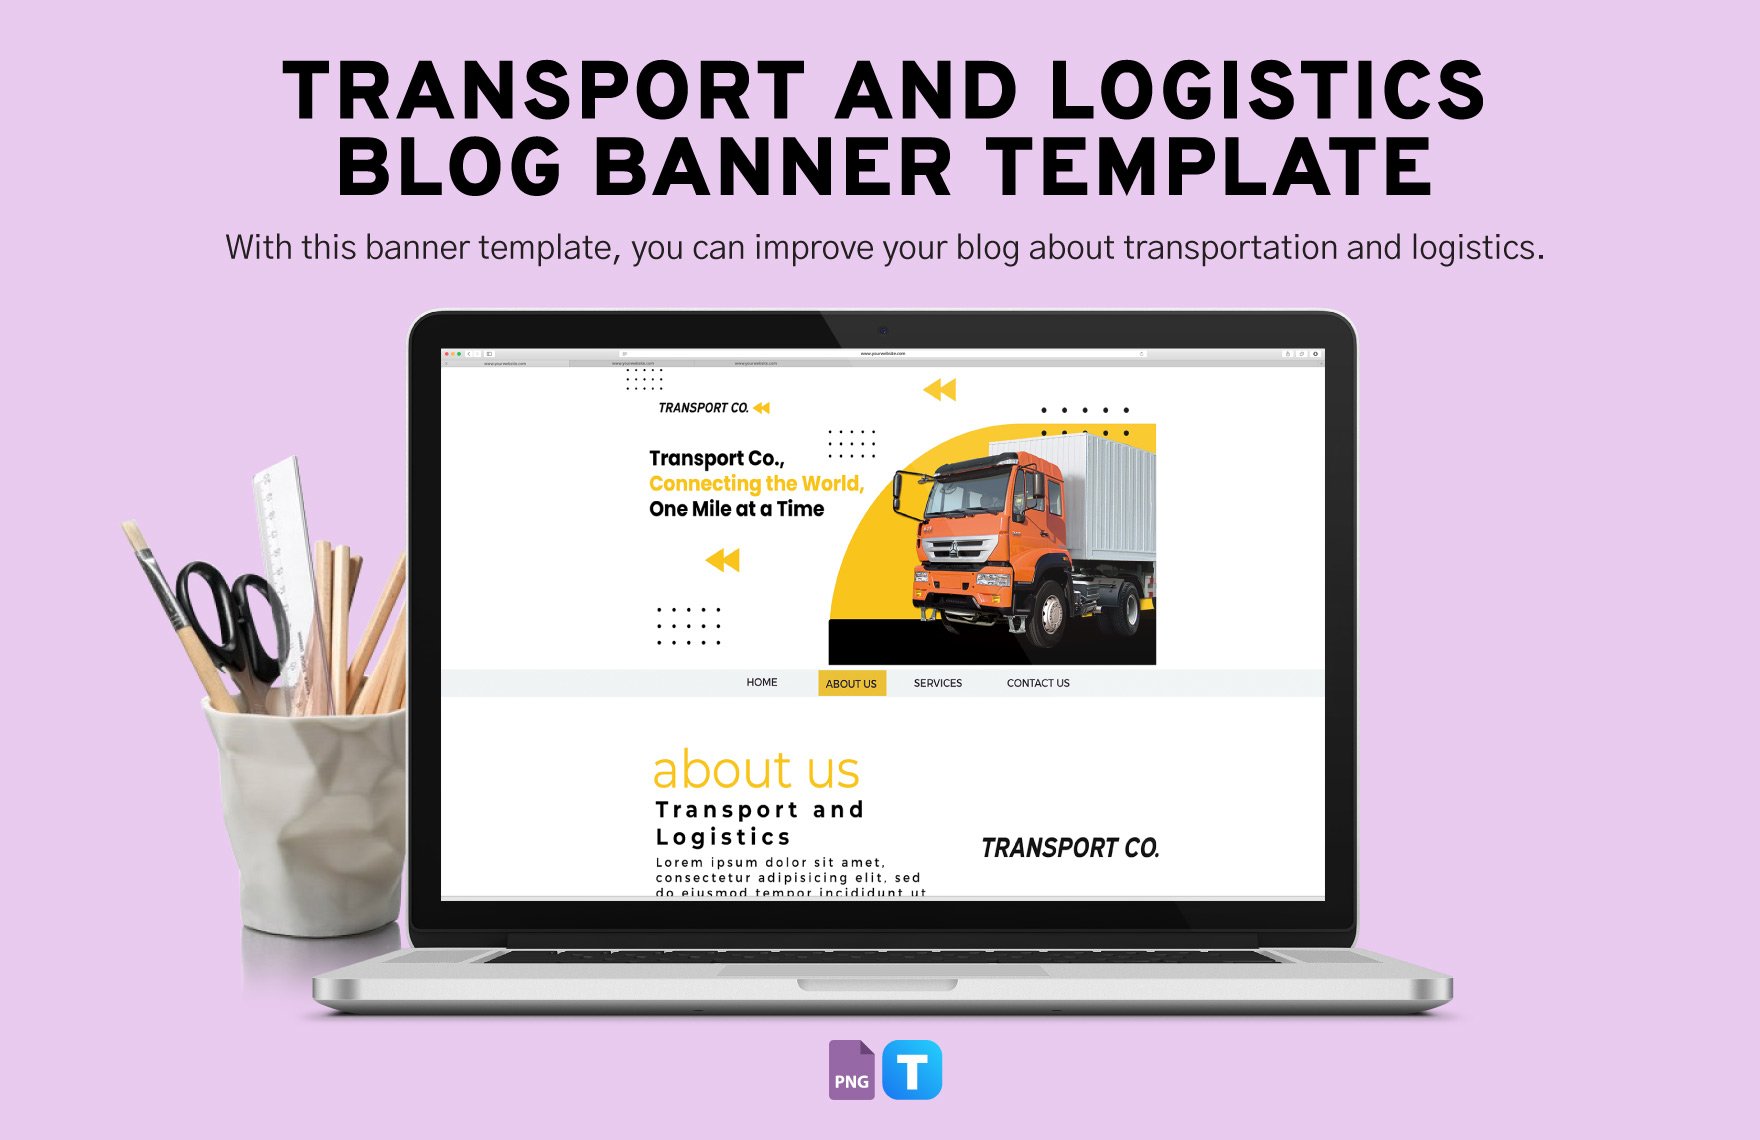 Transport and Logistics Blog Banner Template